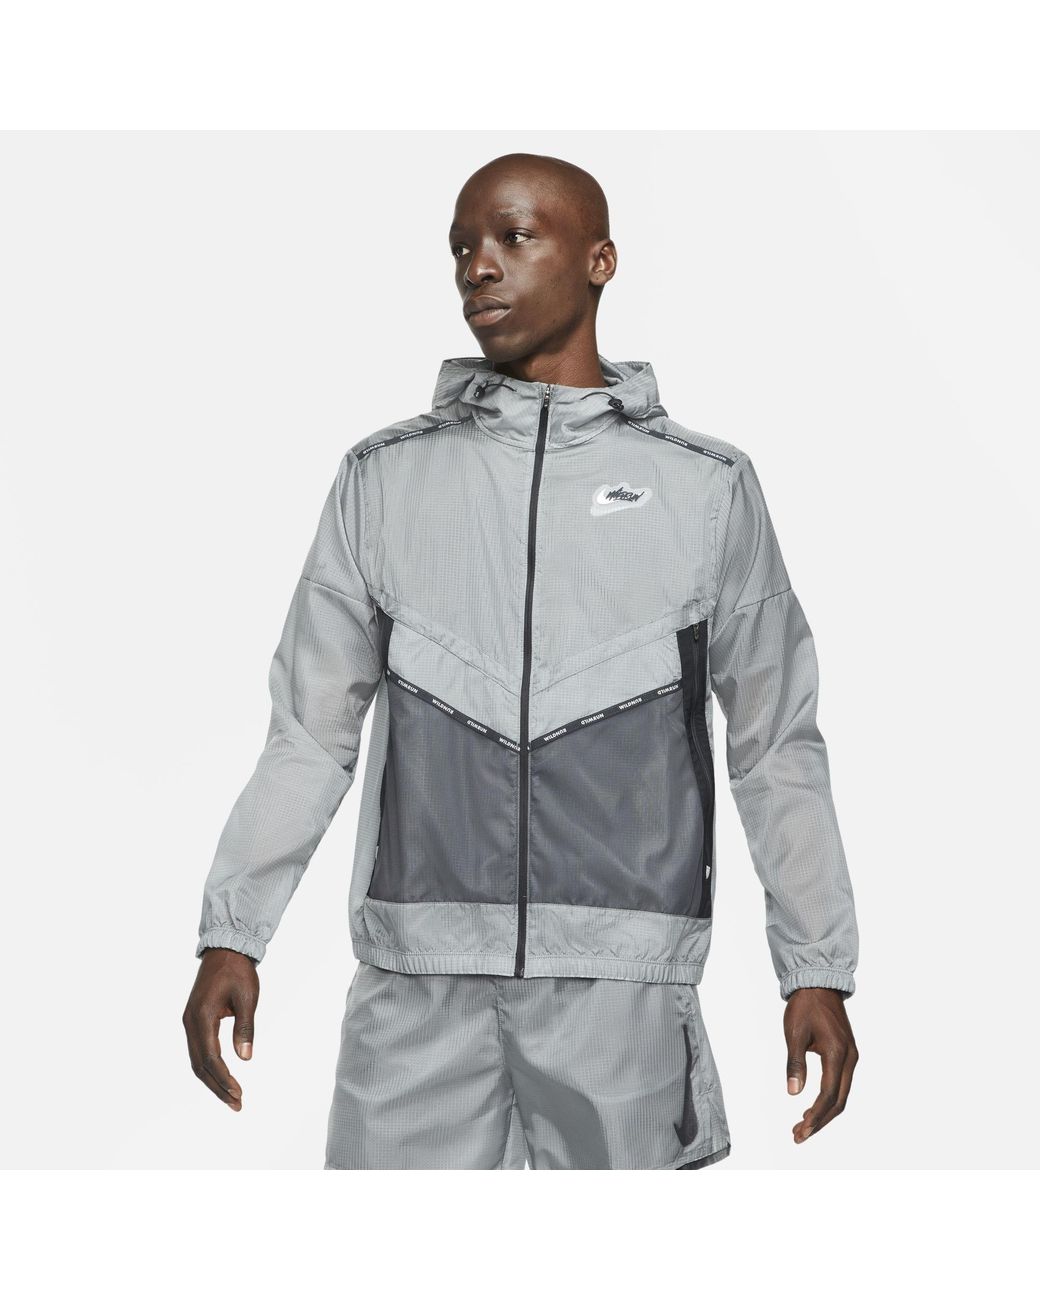 Nike Repel Wild Run Windrunner Graphic Running Jacket in Grey for Men ...